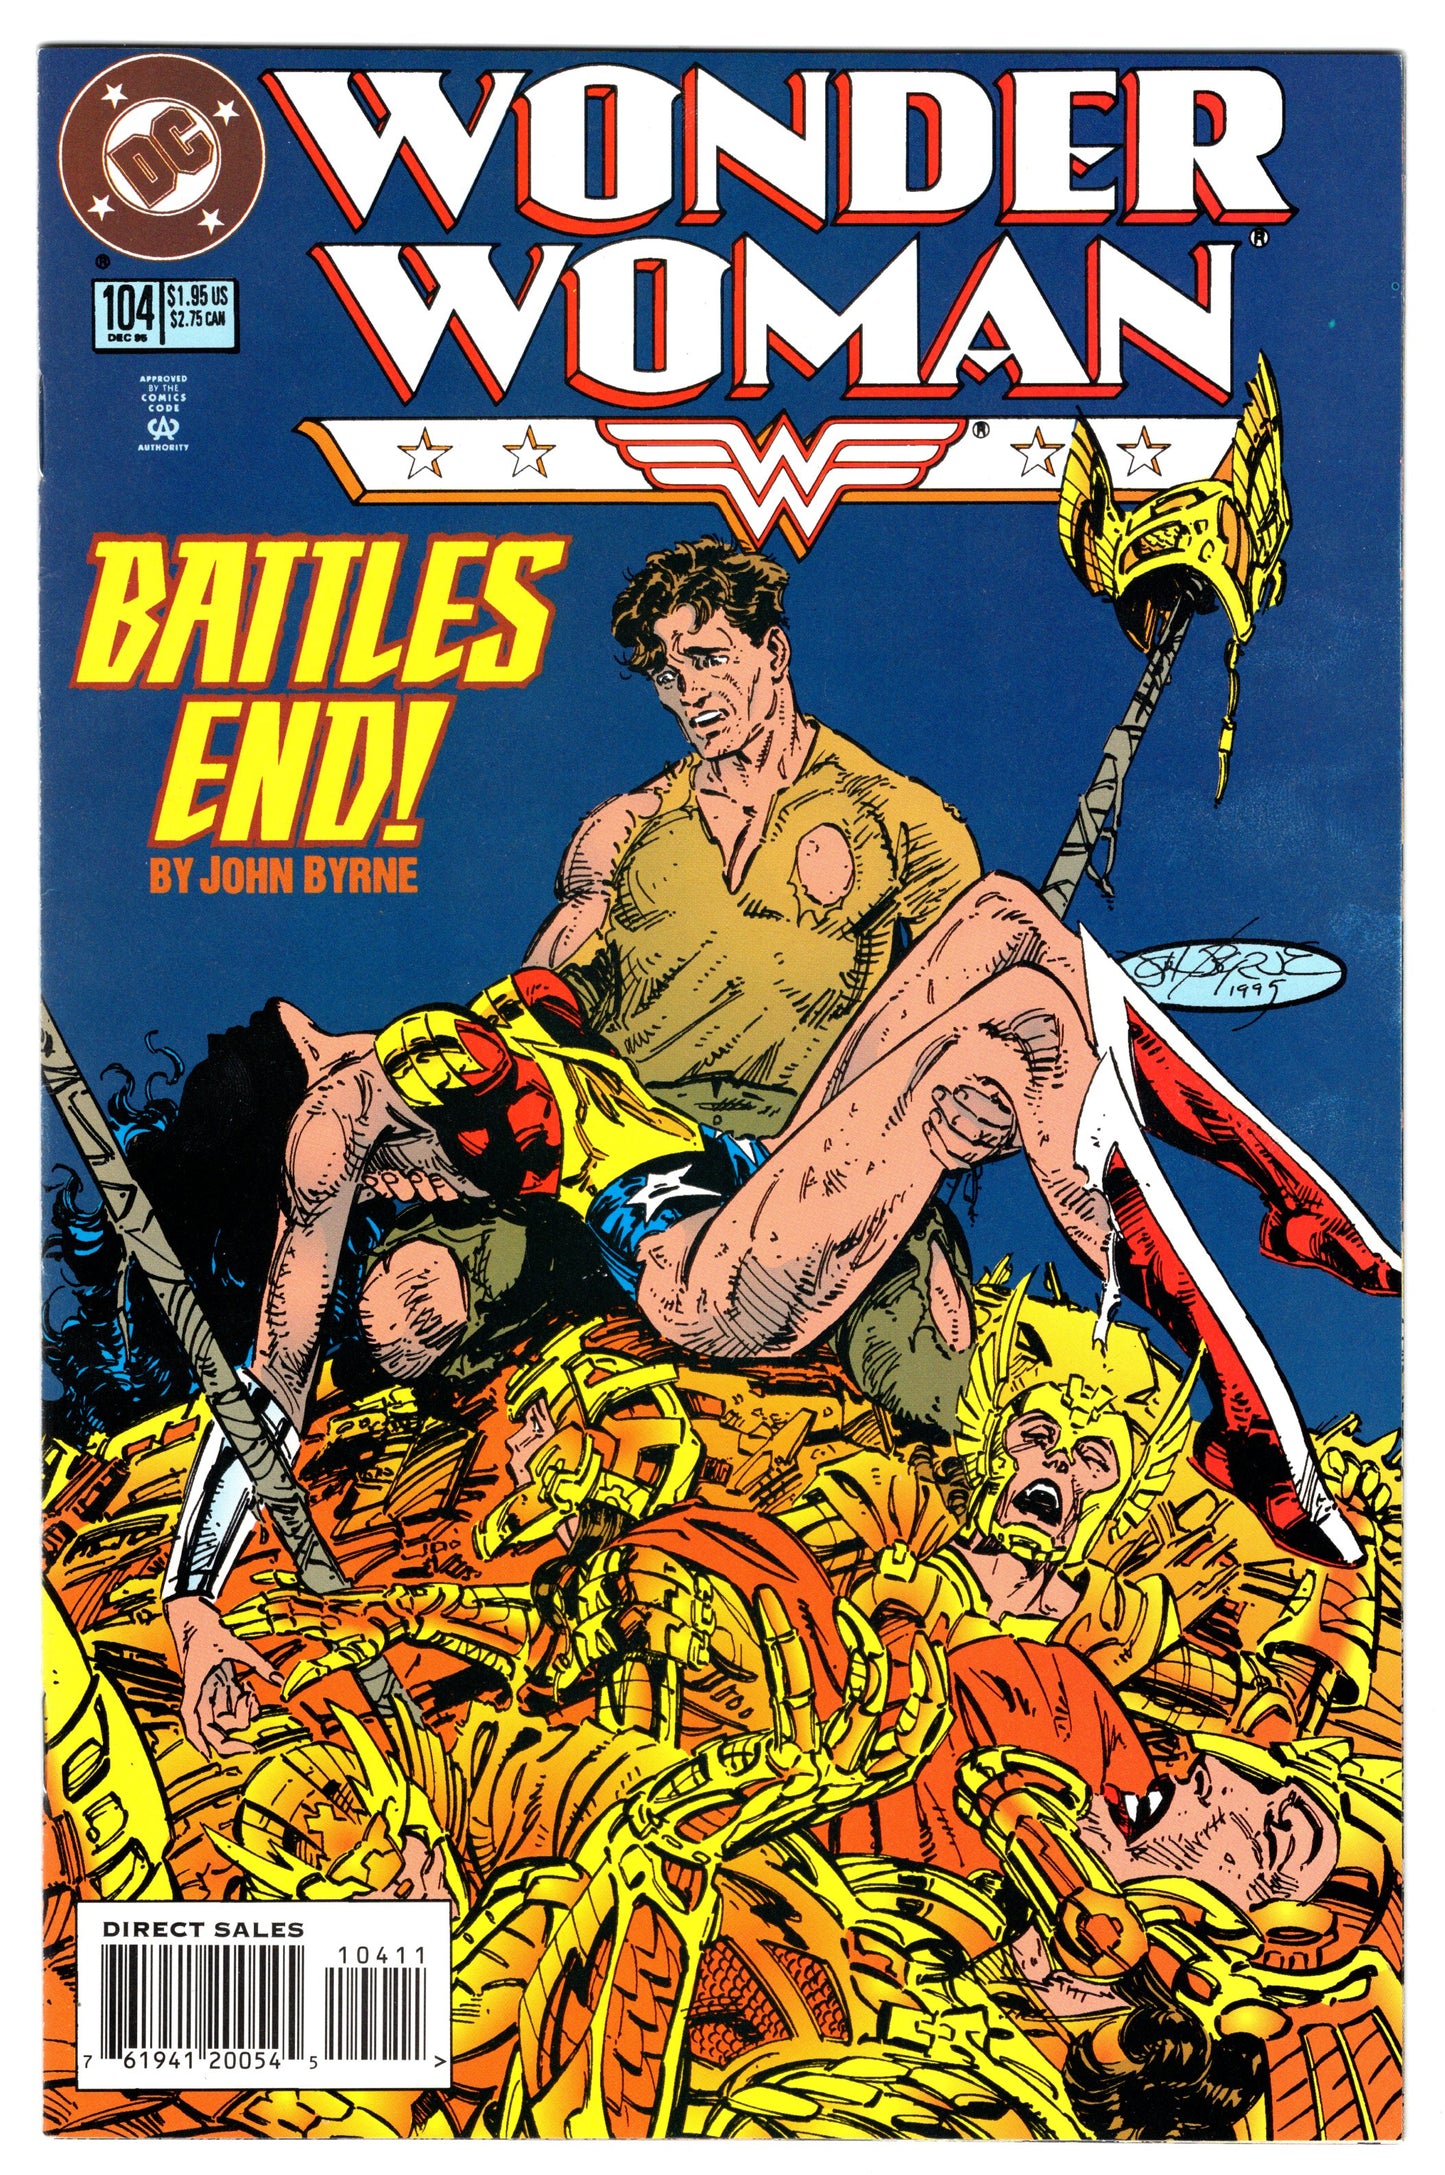 Wonder Woman - Issue #104 "Battles End!" (Dec. 1995 - DC Comics) NM